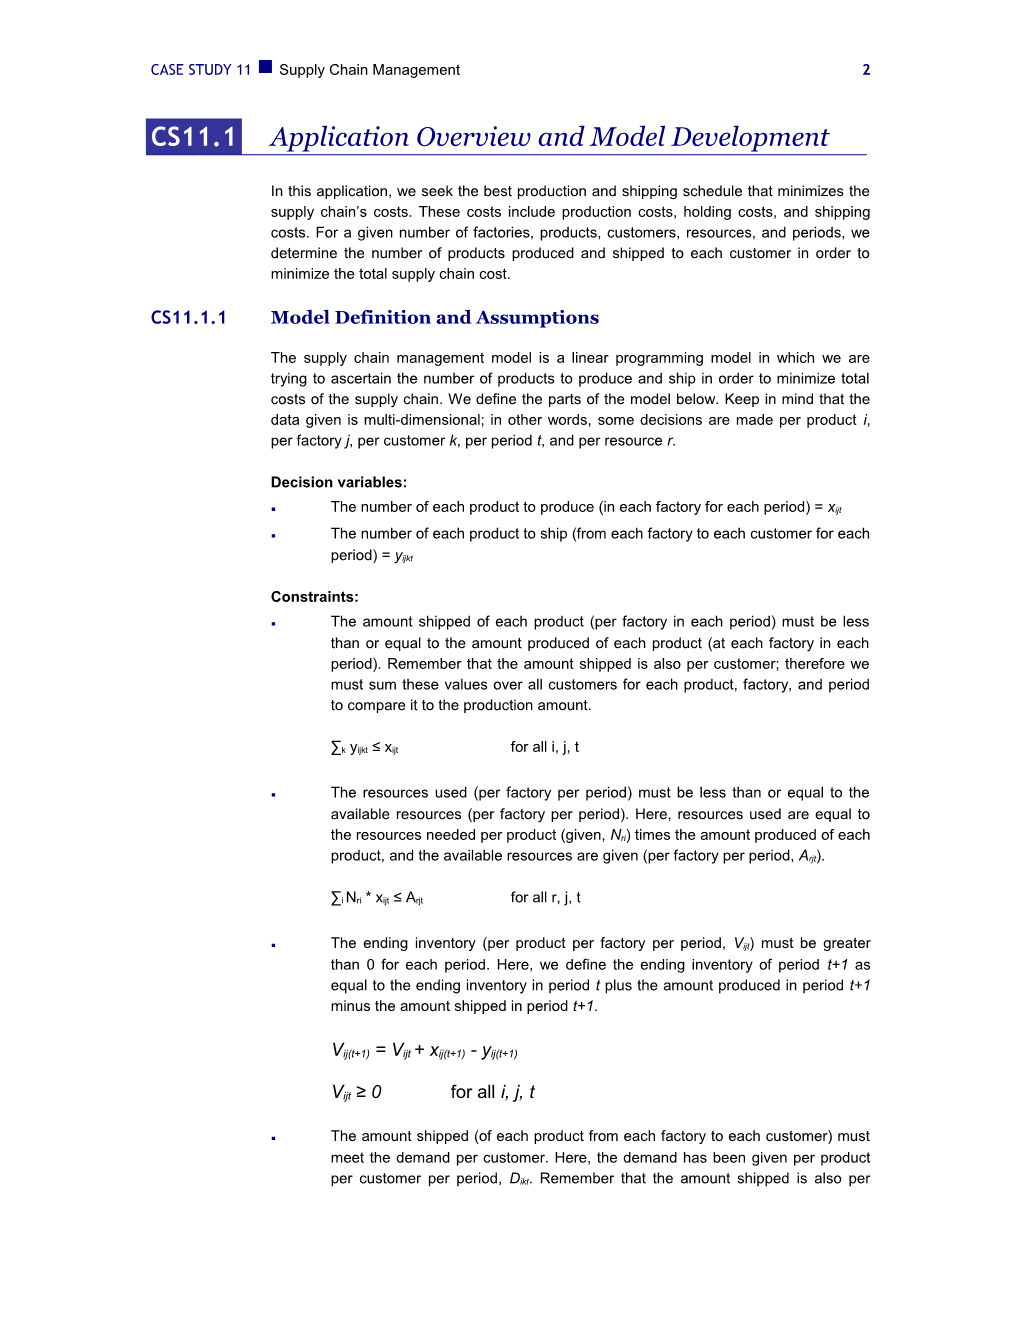 CS11.1.1Model Definition and Assumptions